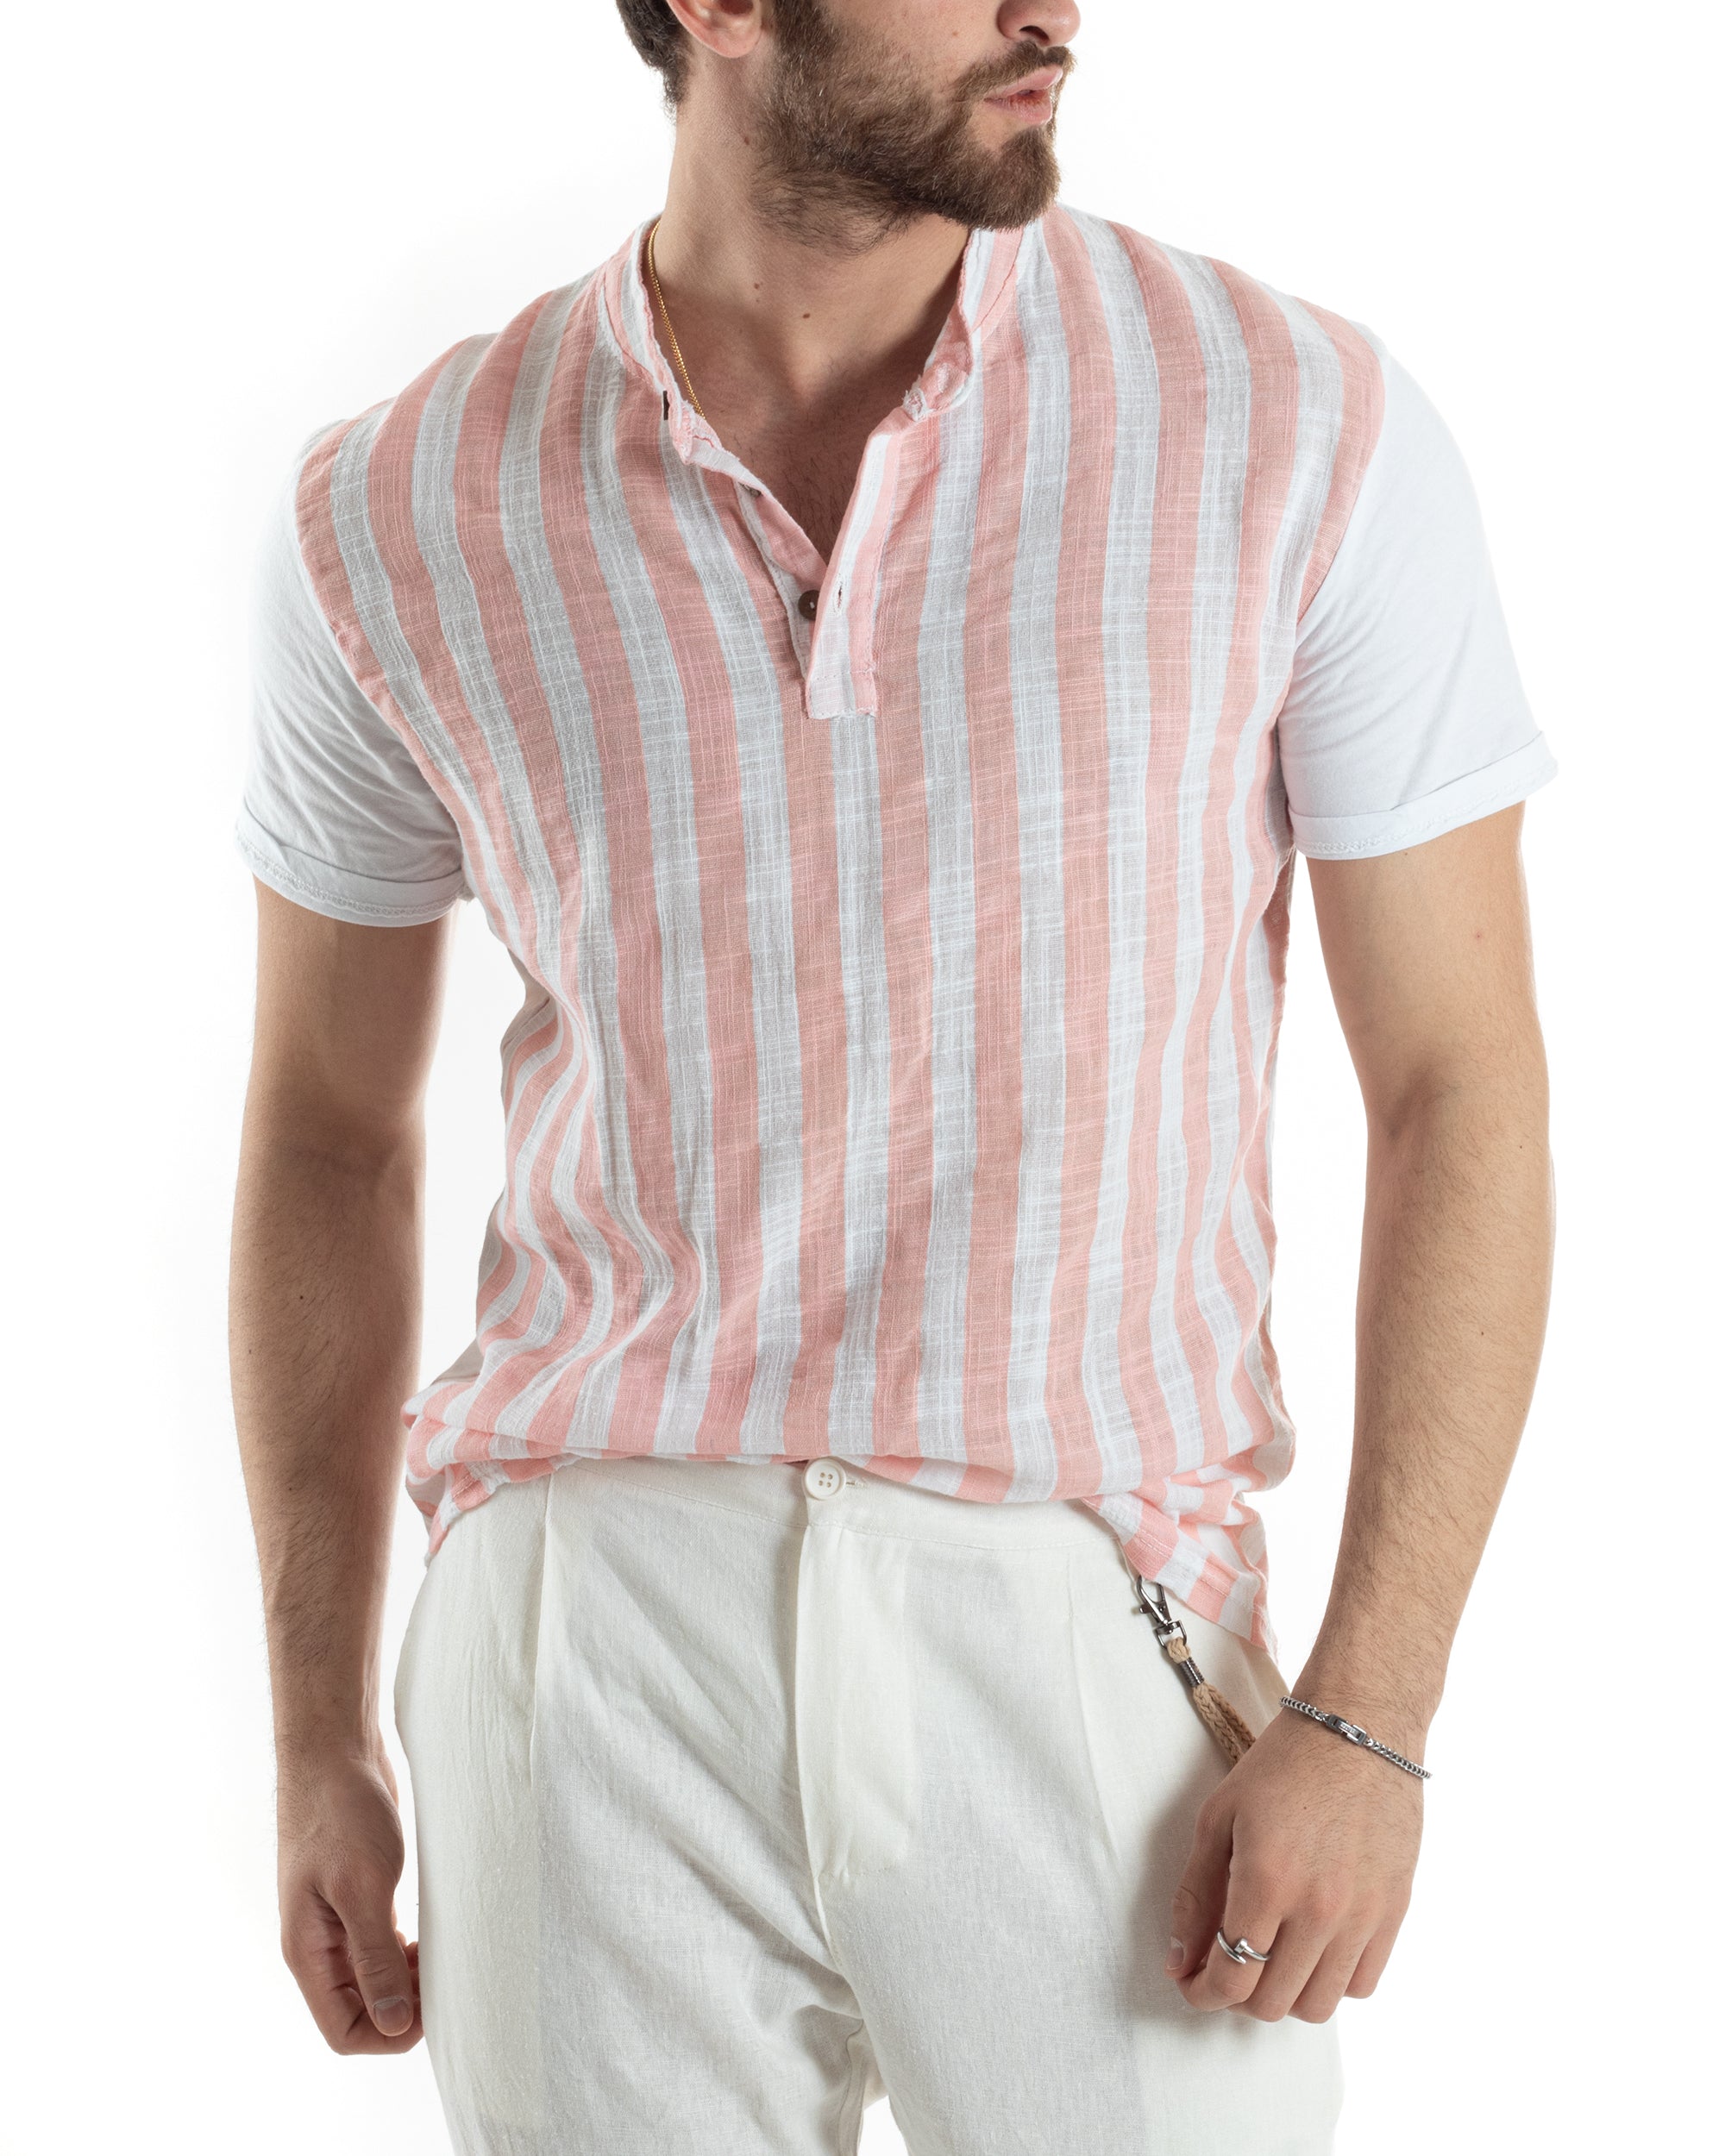 Men's T-shirt Striped Short Sleeves Mandarin Collar Pink Casual GIOSAL